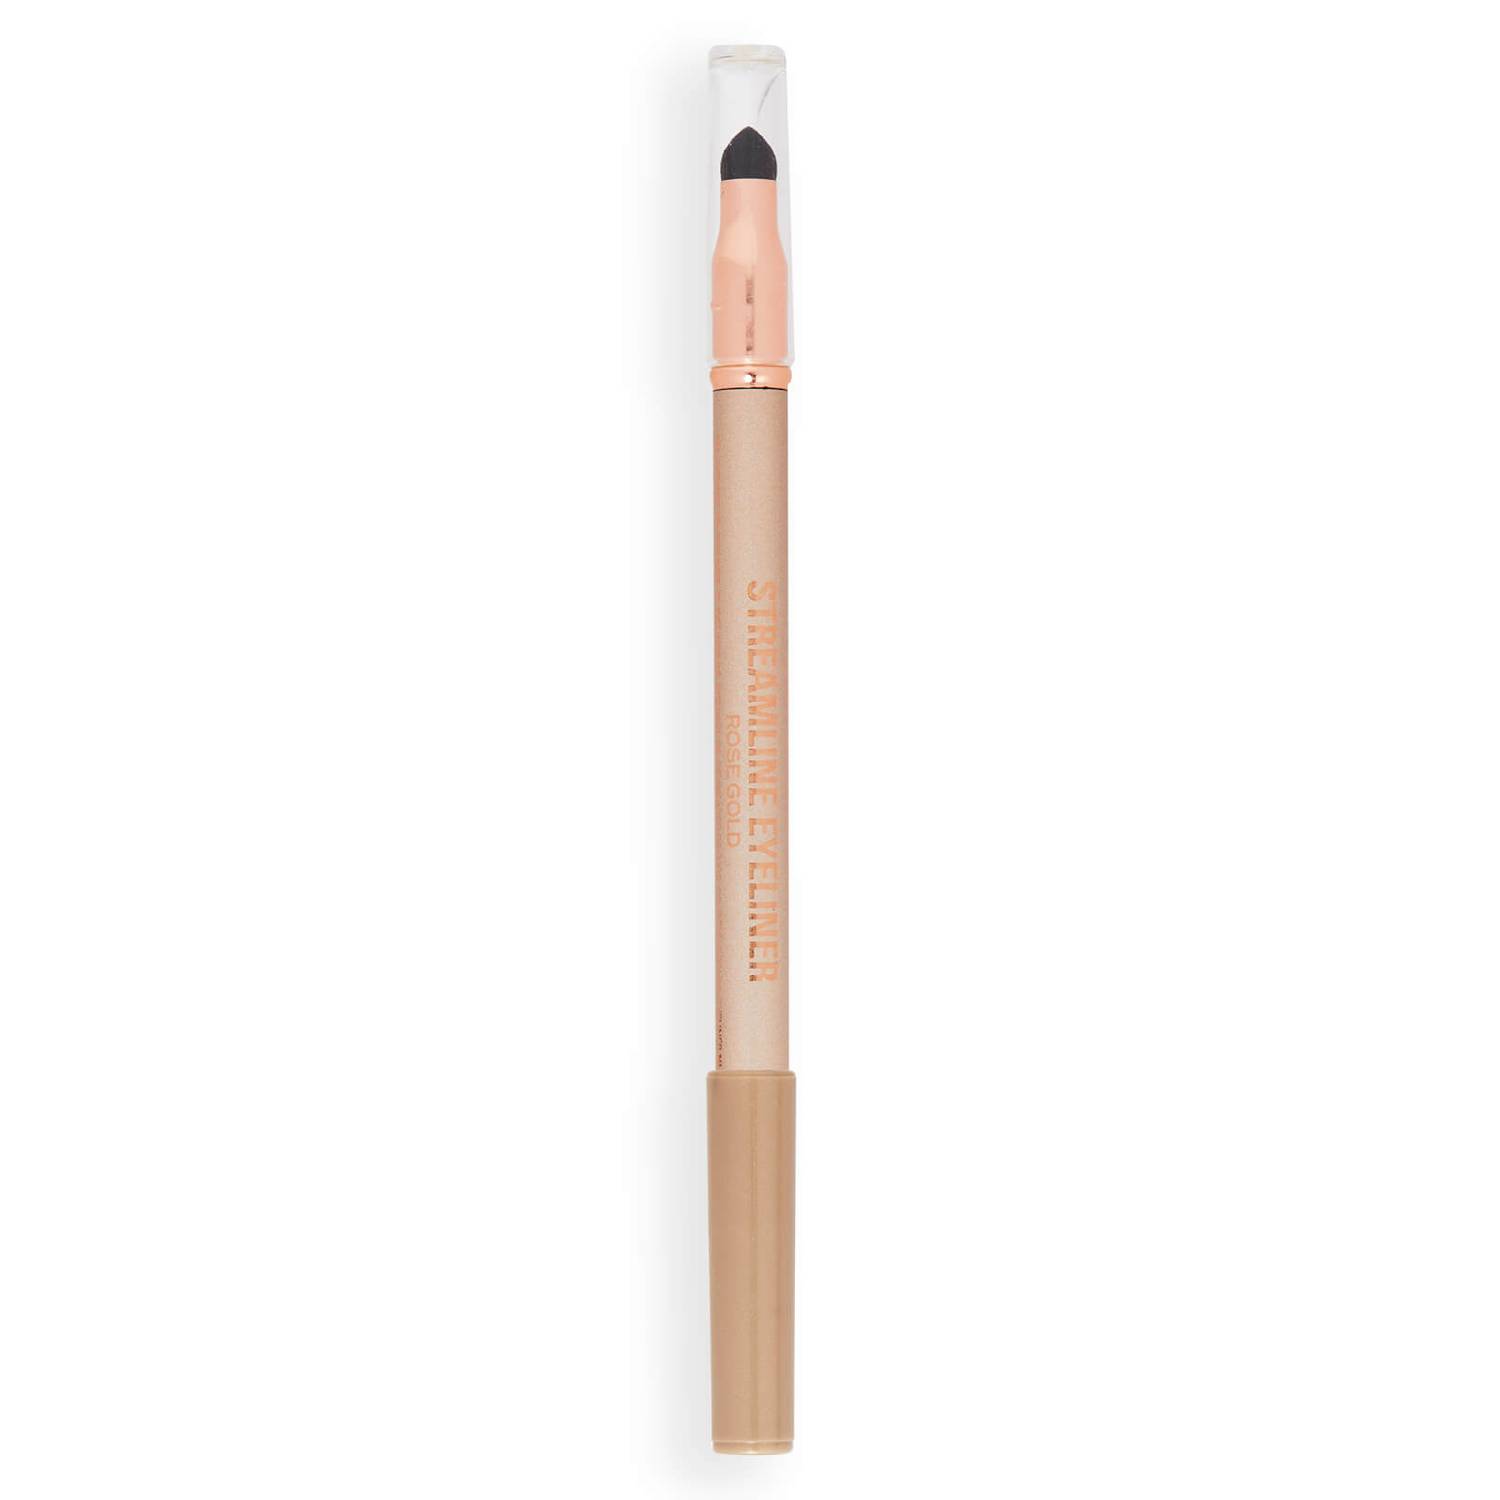 Карандаш для глаз Makeup Revolution Streamline Waterline Eyeliner Pencil, Rose Gold